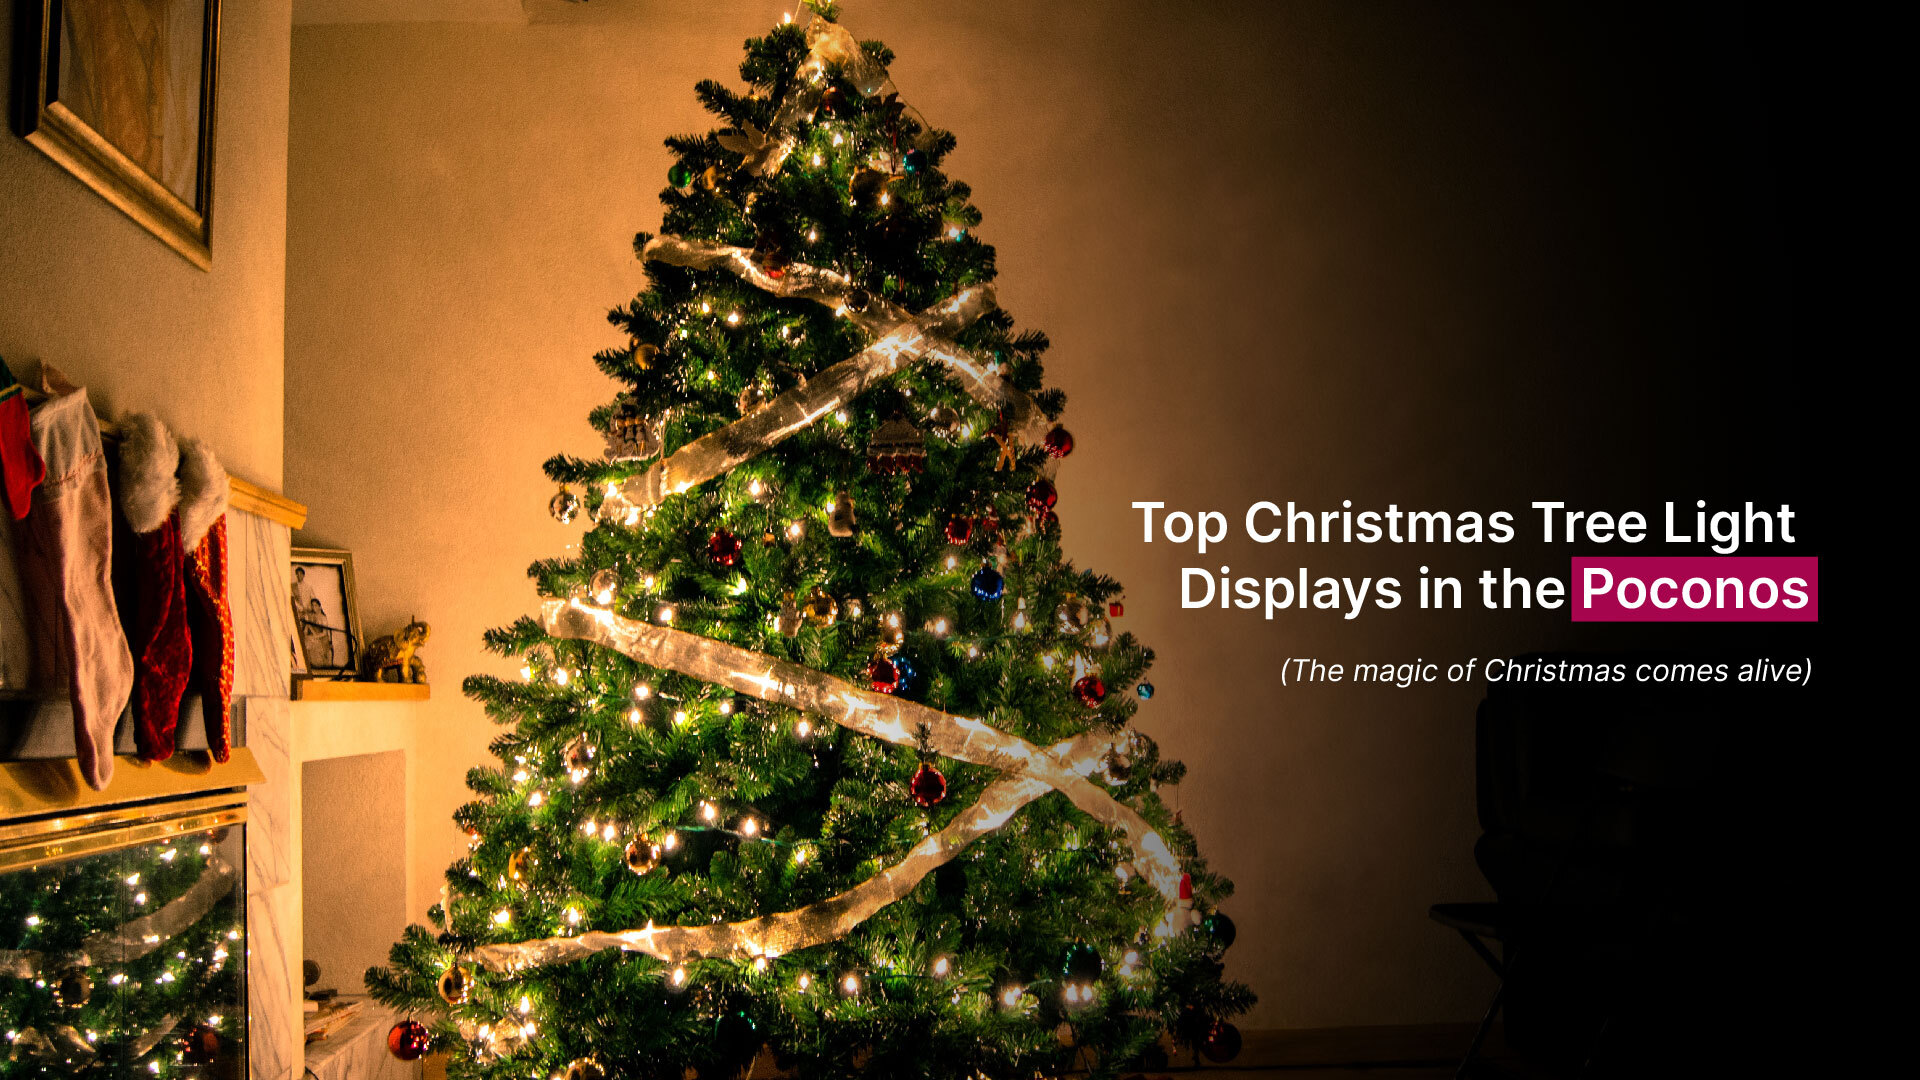 Top Christmas Tree Light Displays in the Poconos